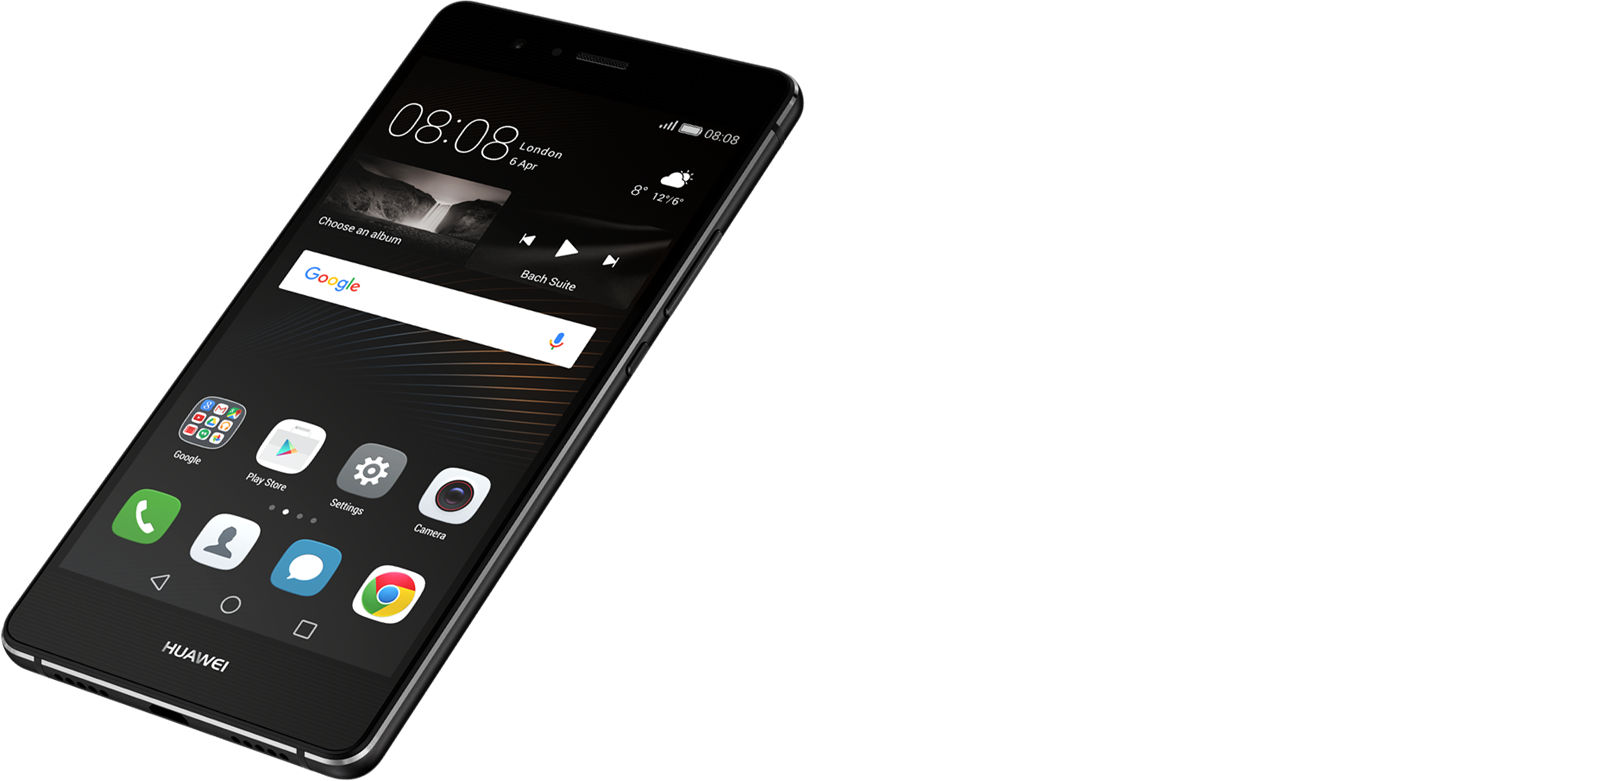 Huawei P9 Lite VNS-L21 Dual Sim mobilní telefon, mobil, smartphone